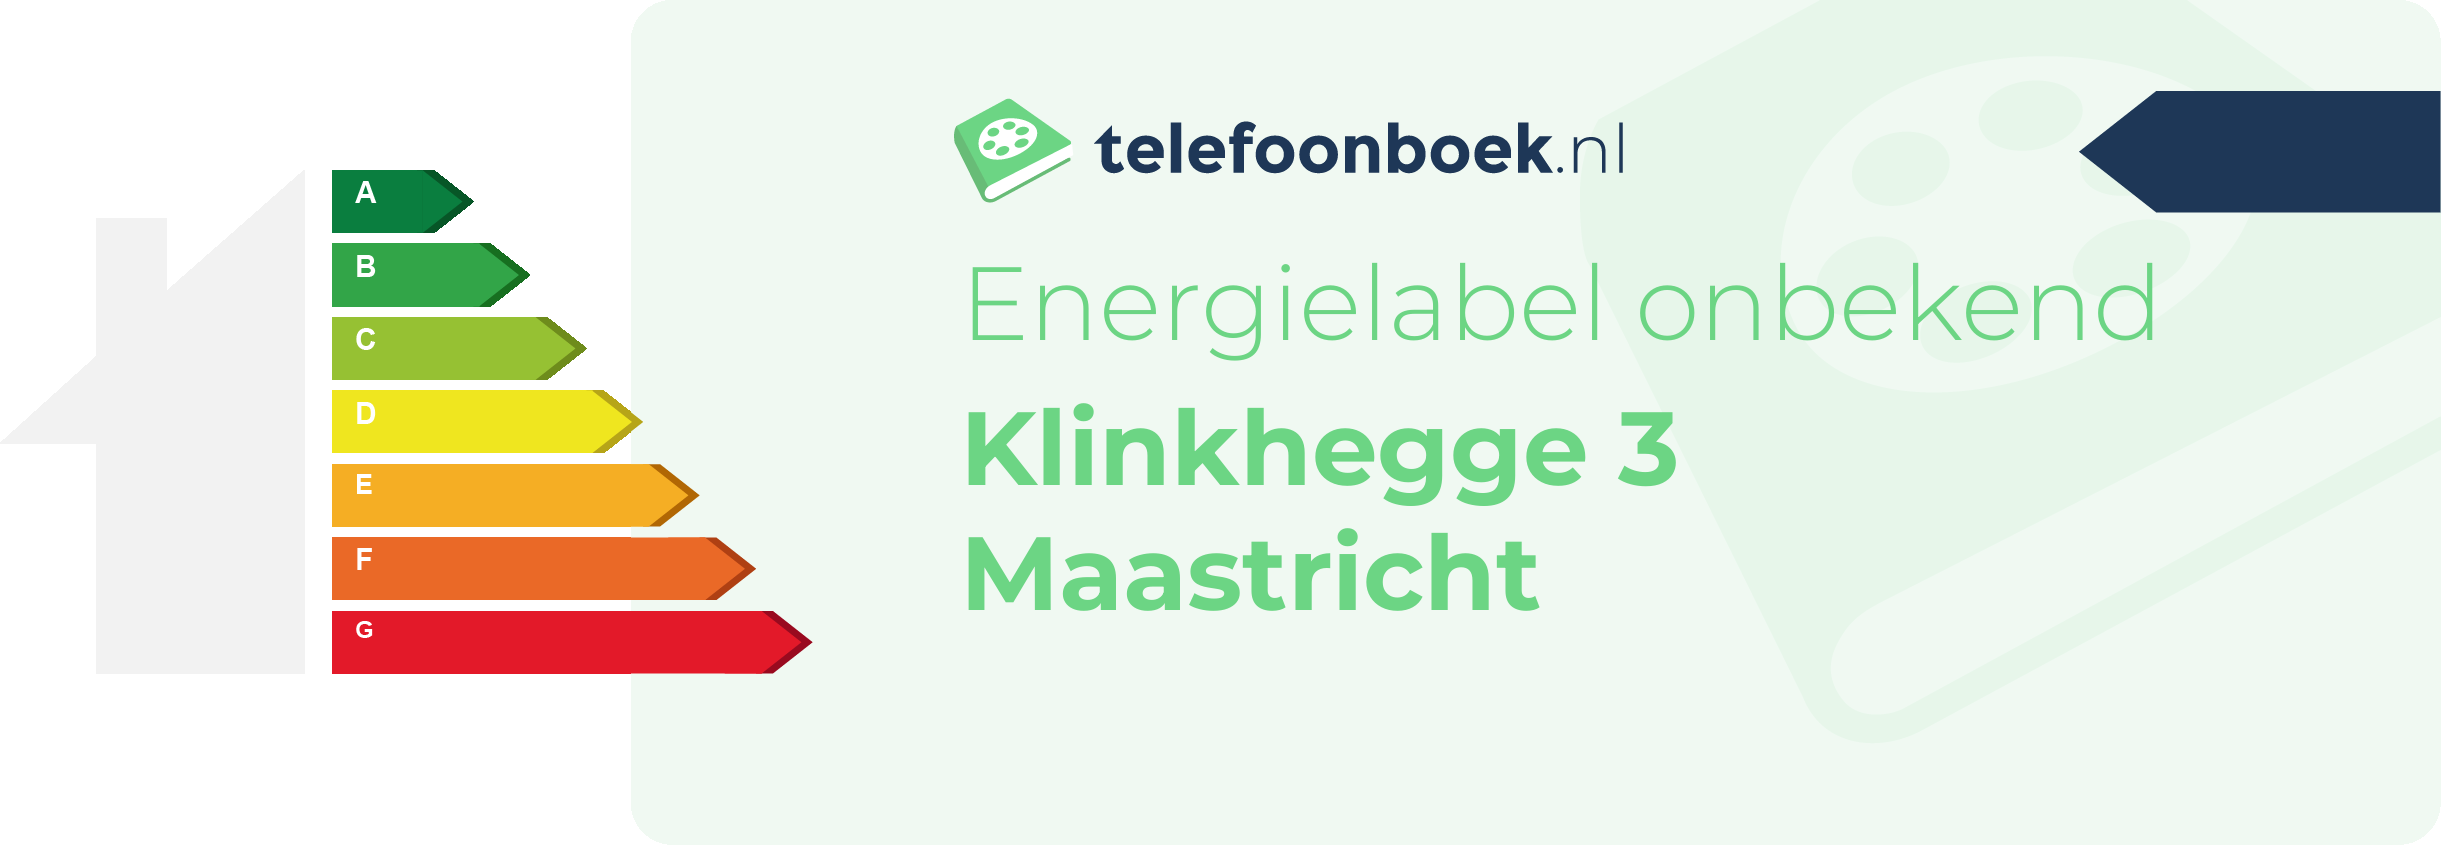 Energielabel Klinkhegge 3 Maastricht